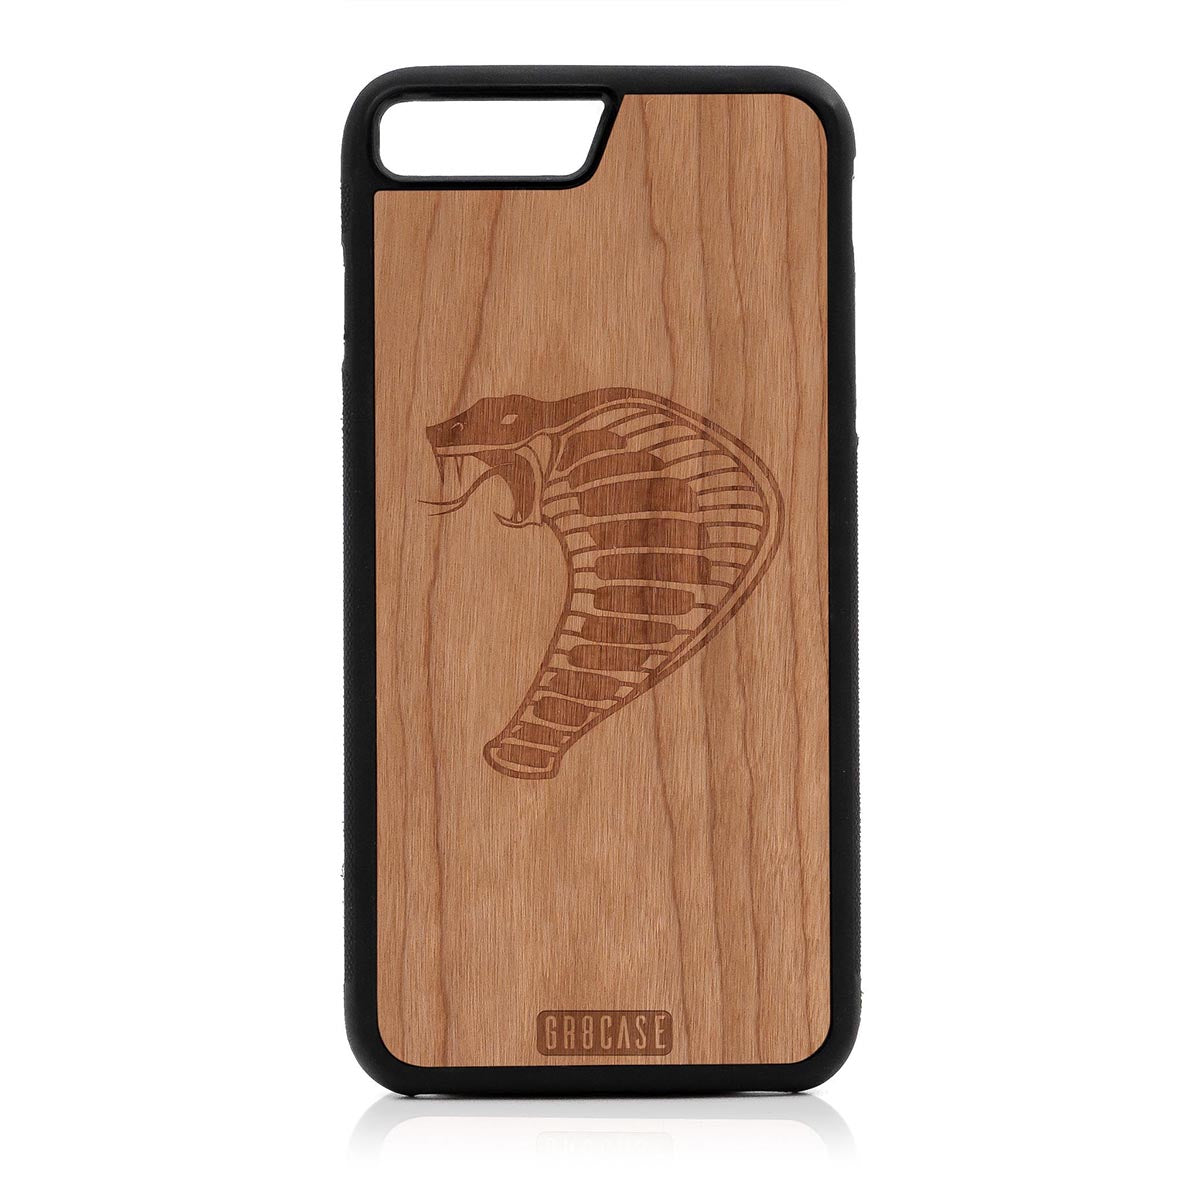 Cobra Design Wood Case For iPhone 7 Plus / 8 Plus by GR8CASE